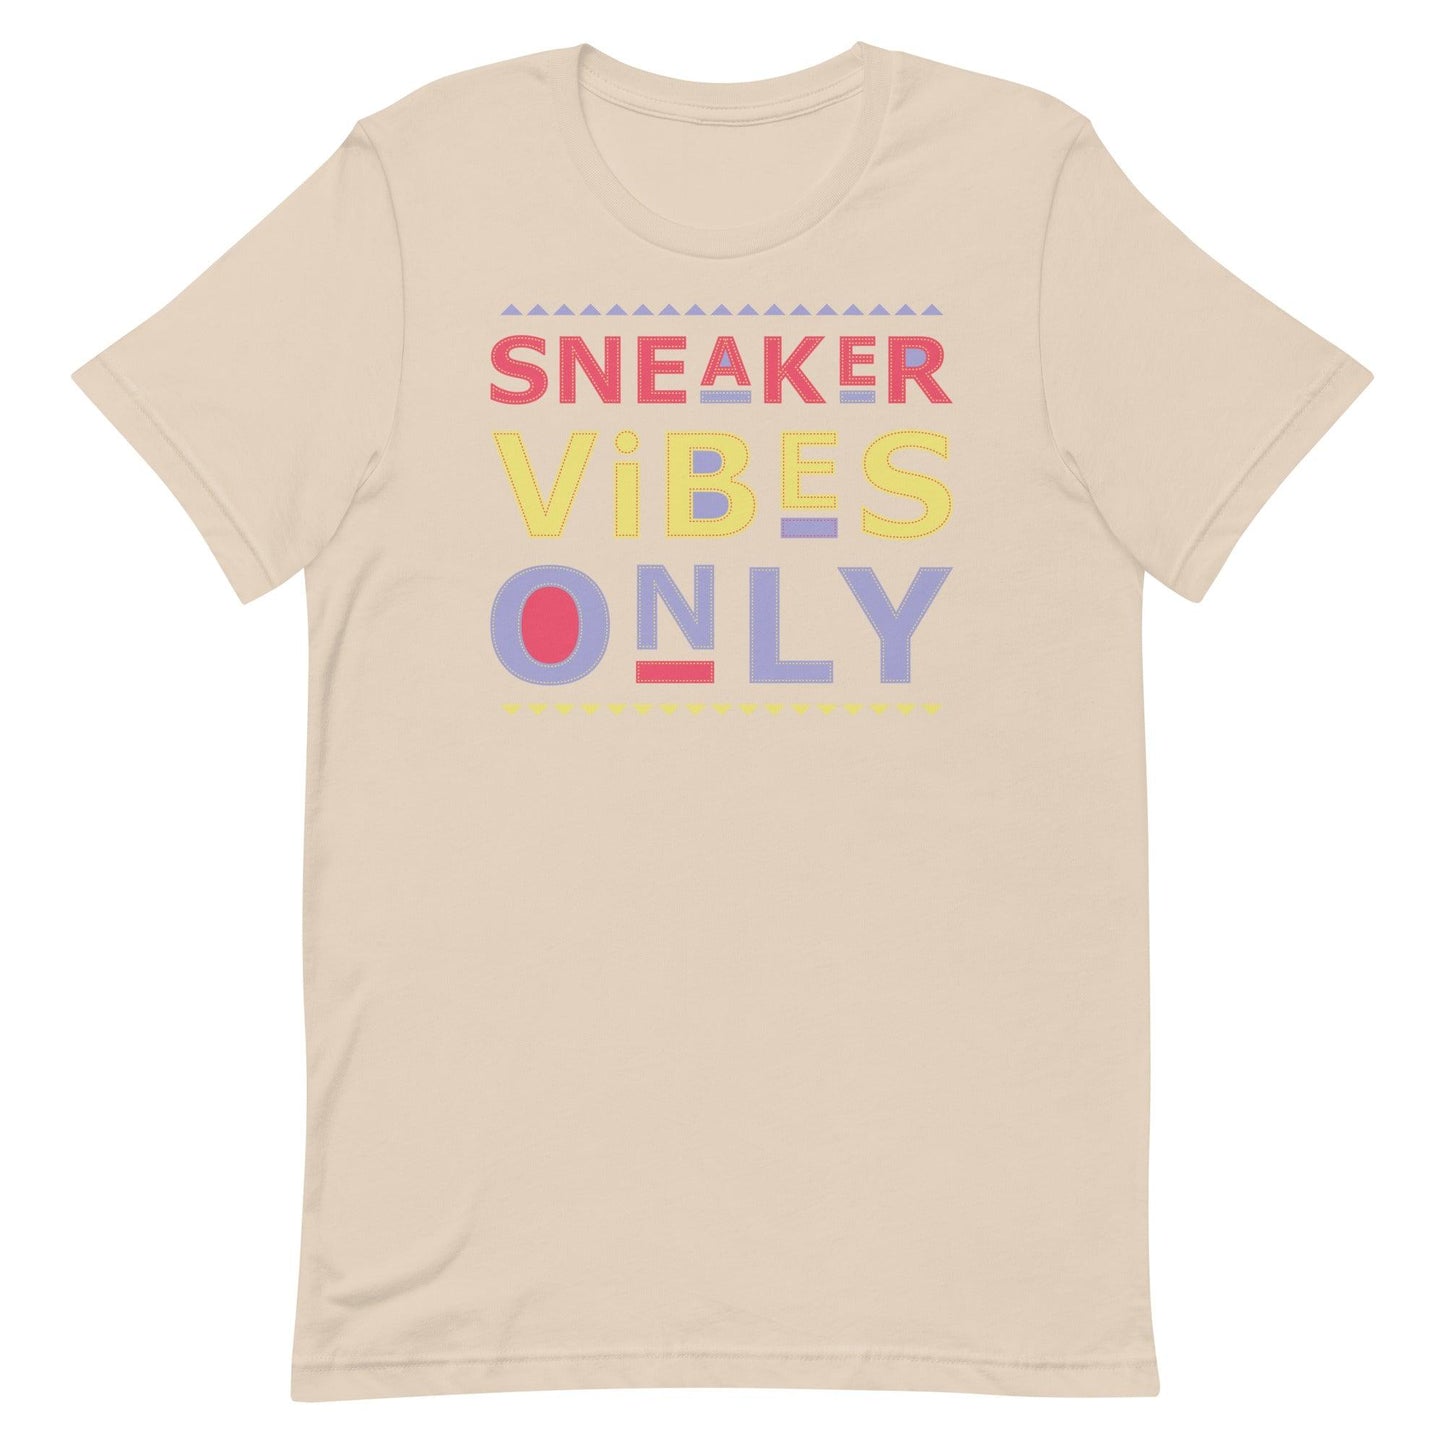 Sneaker Vibes Only Shirt To Match Union LA Nike Cortez Lemon Frost - SNKADX